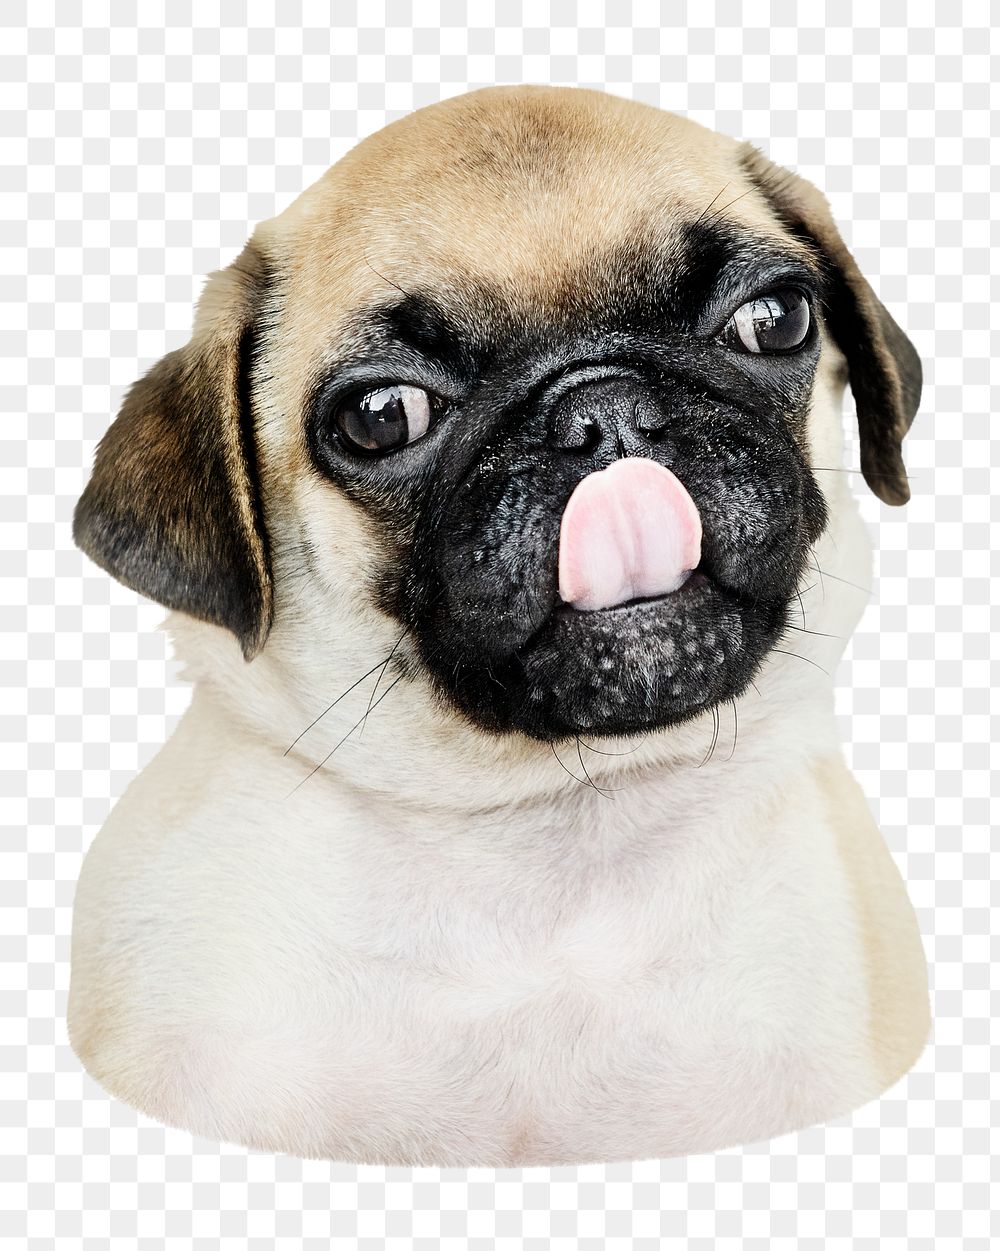 Adorable pug puppy png sticker, transparent background